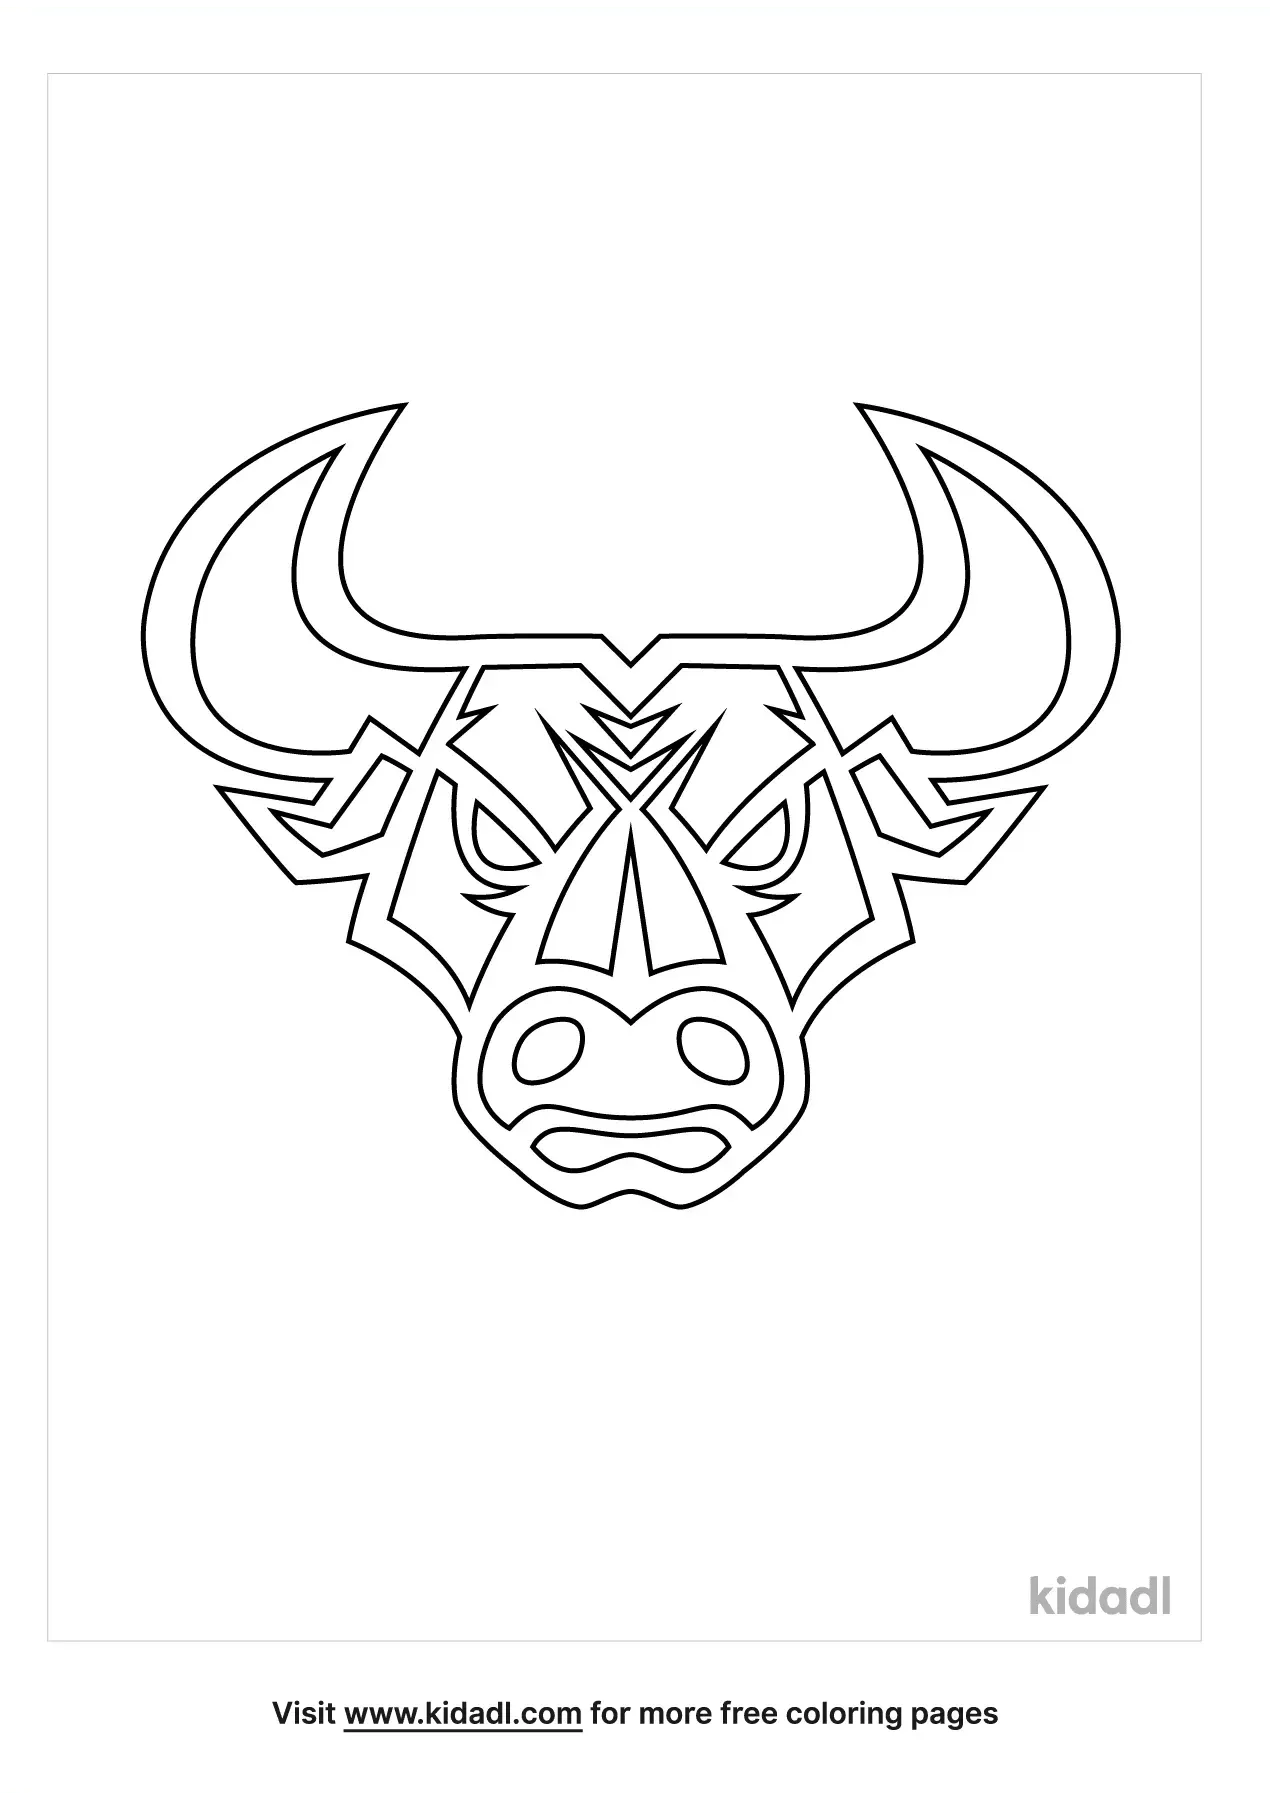 Free Cartoon Bulls Head Coloring Page | Coloring Page Printables | Kidadl